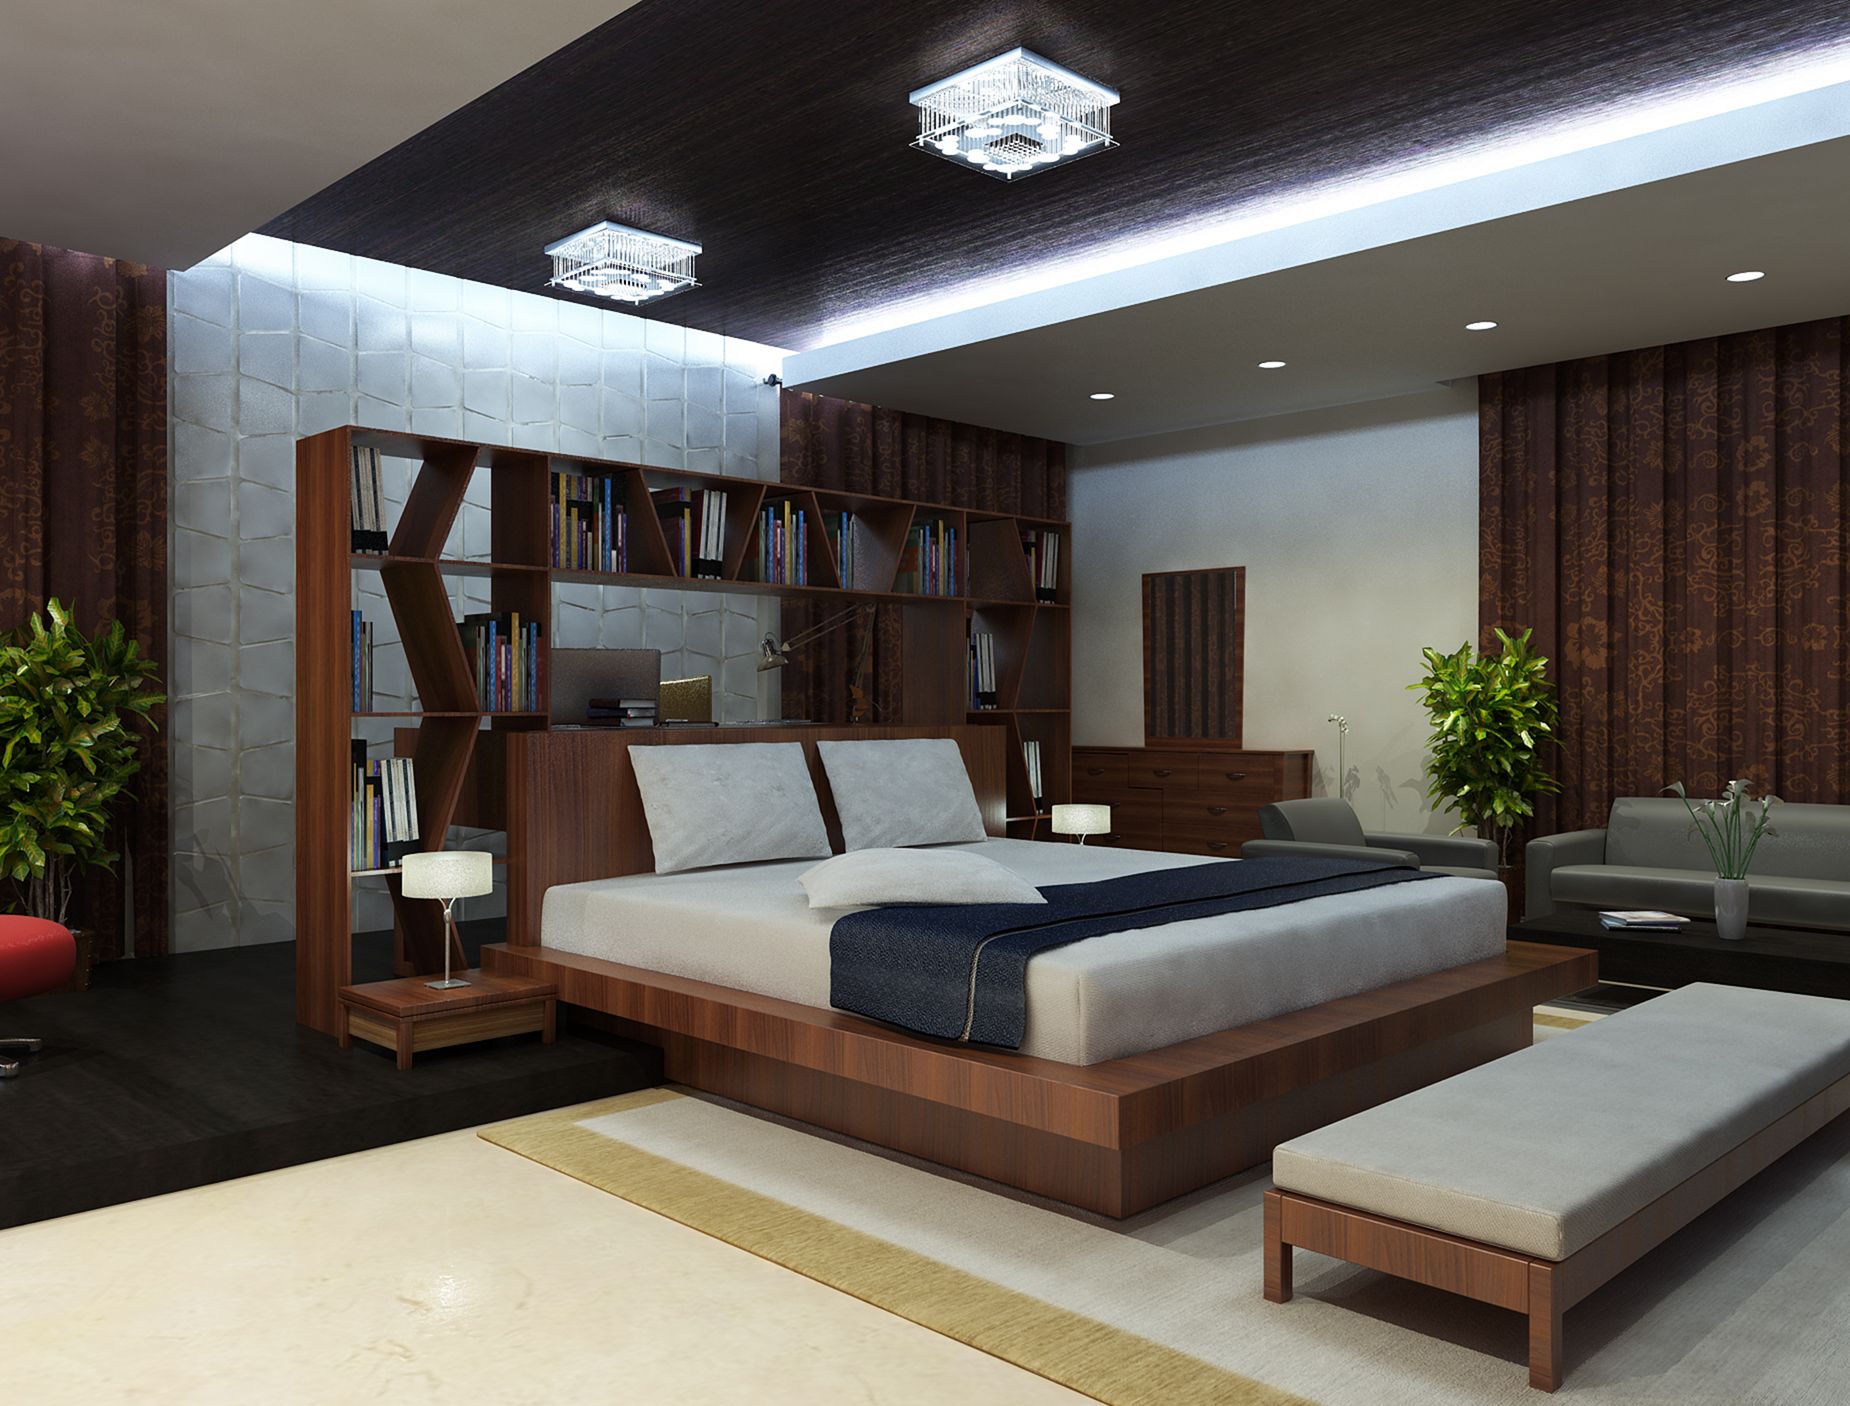 35 Best Interior Design Inspiration For Amazing Room 